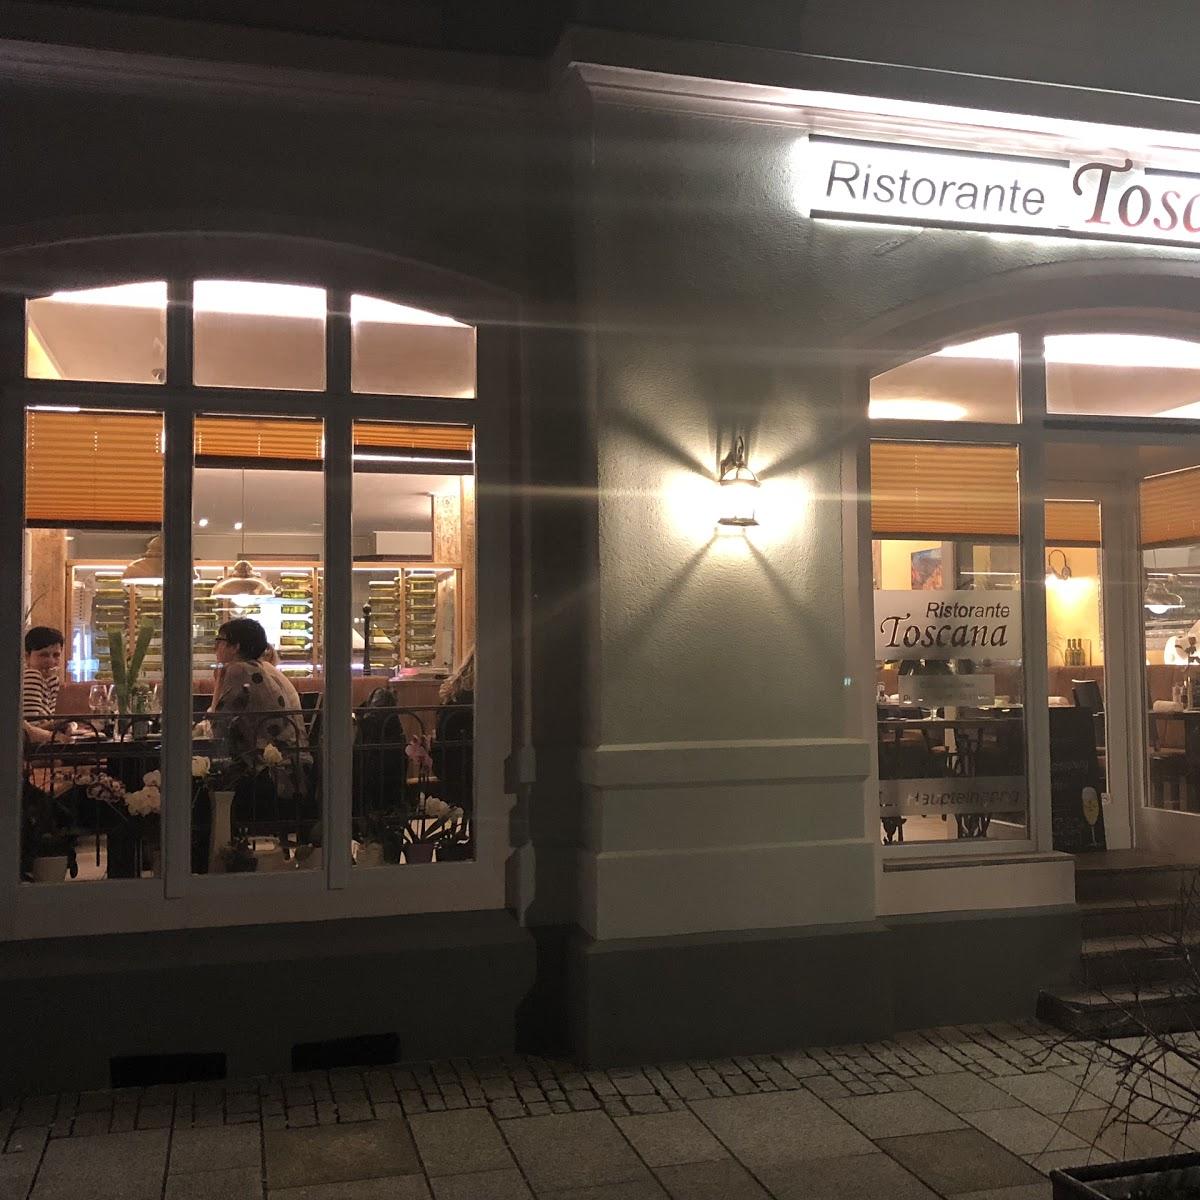 Restaurant "Ristorante Toscana" in  Meiningen